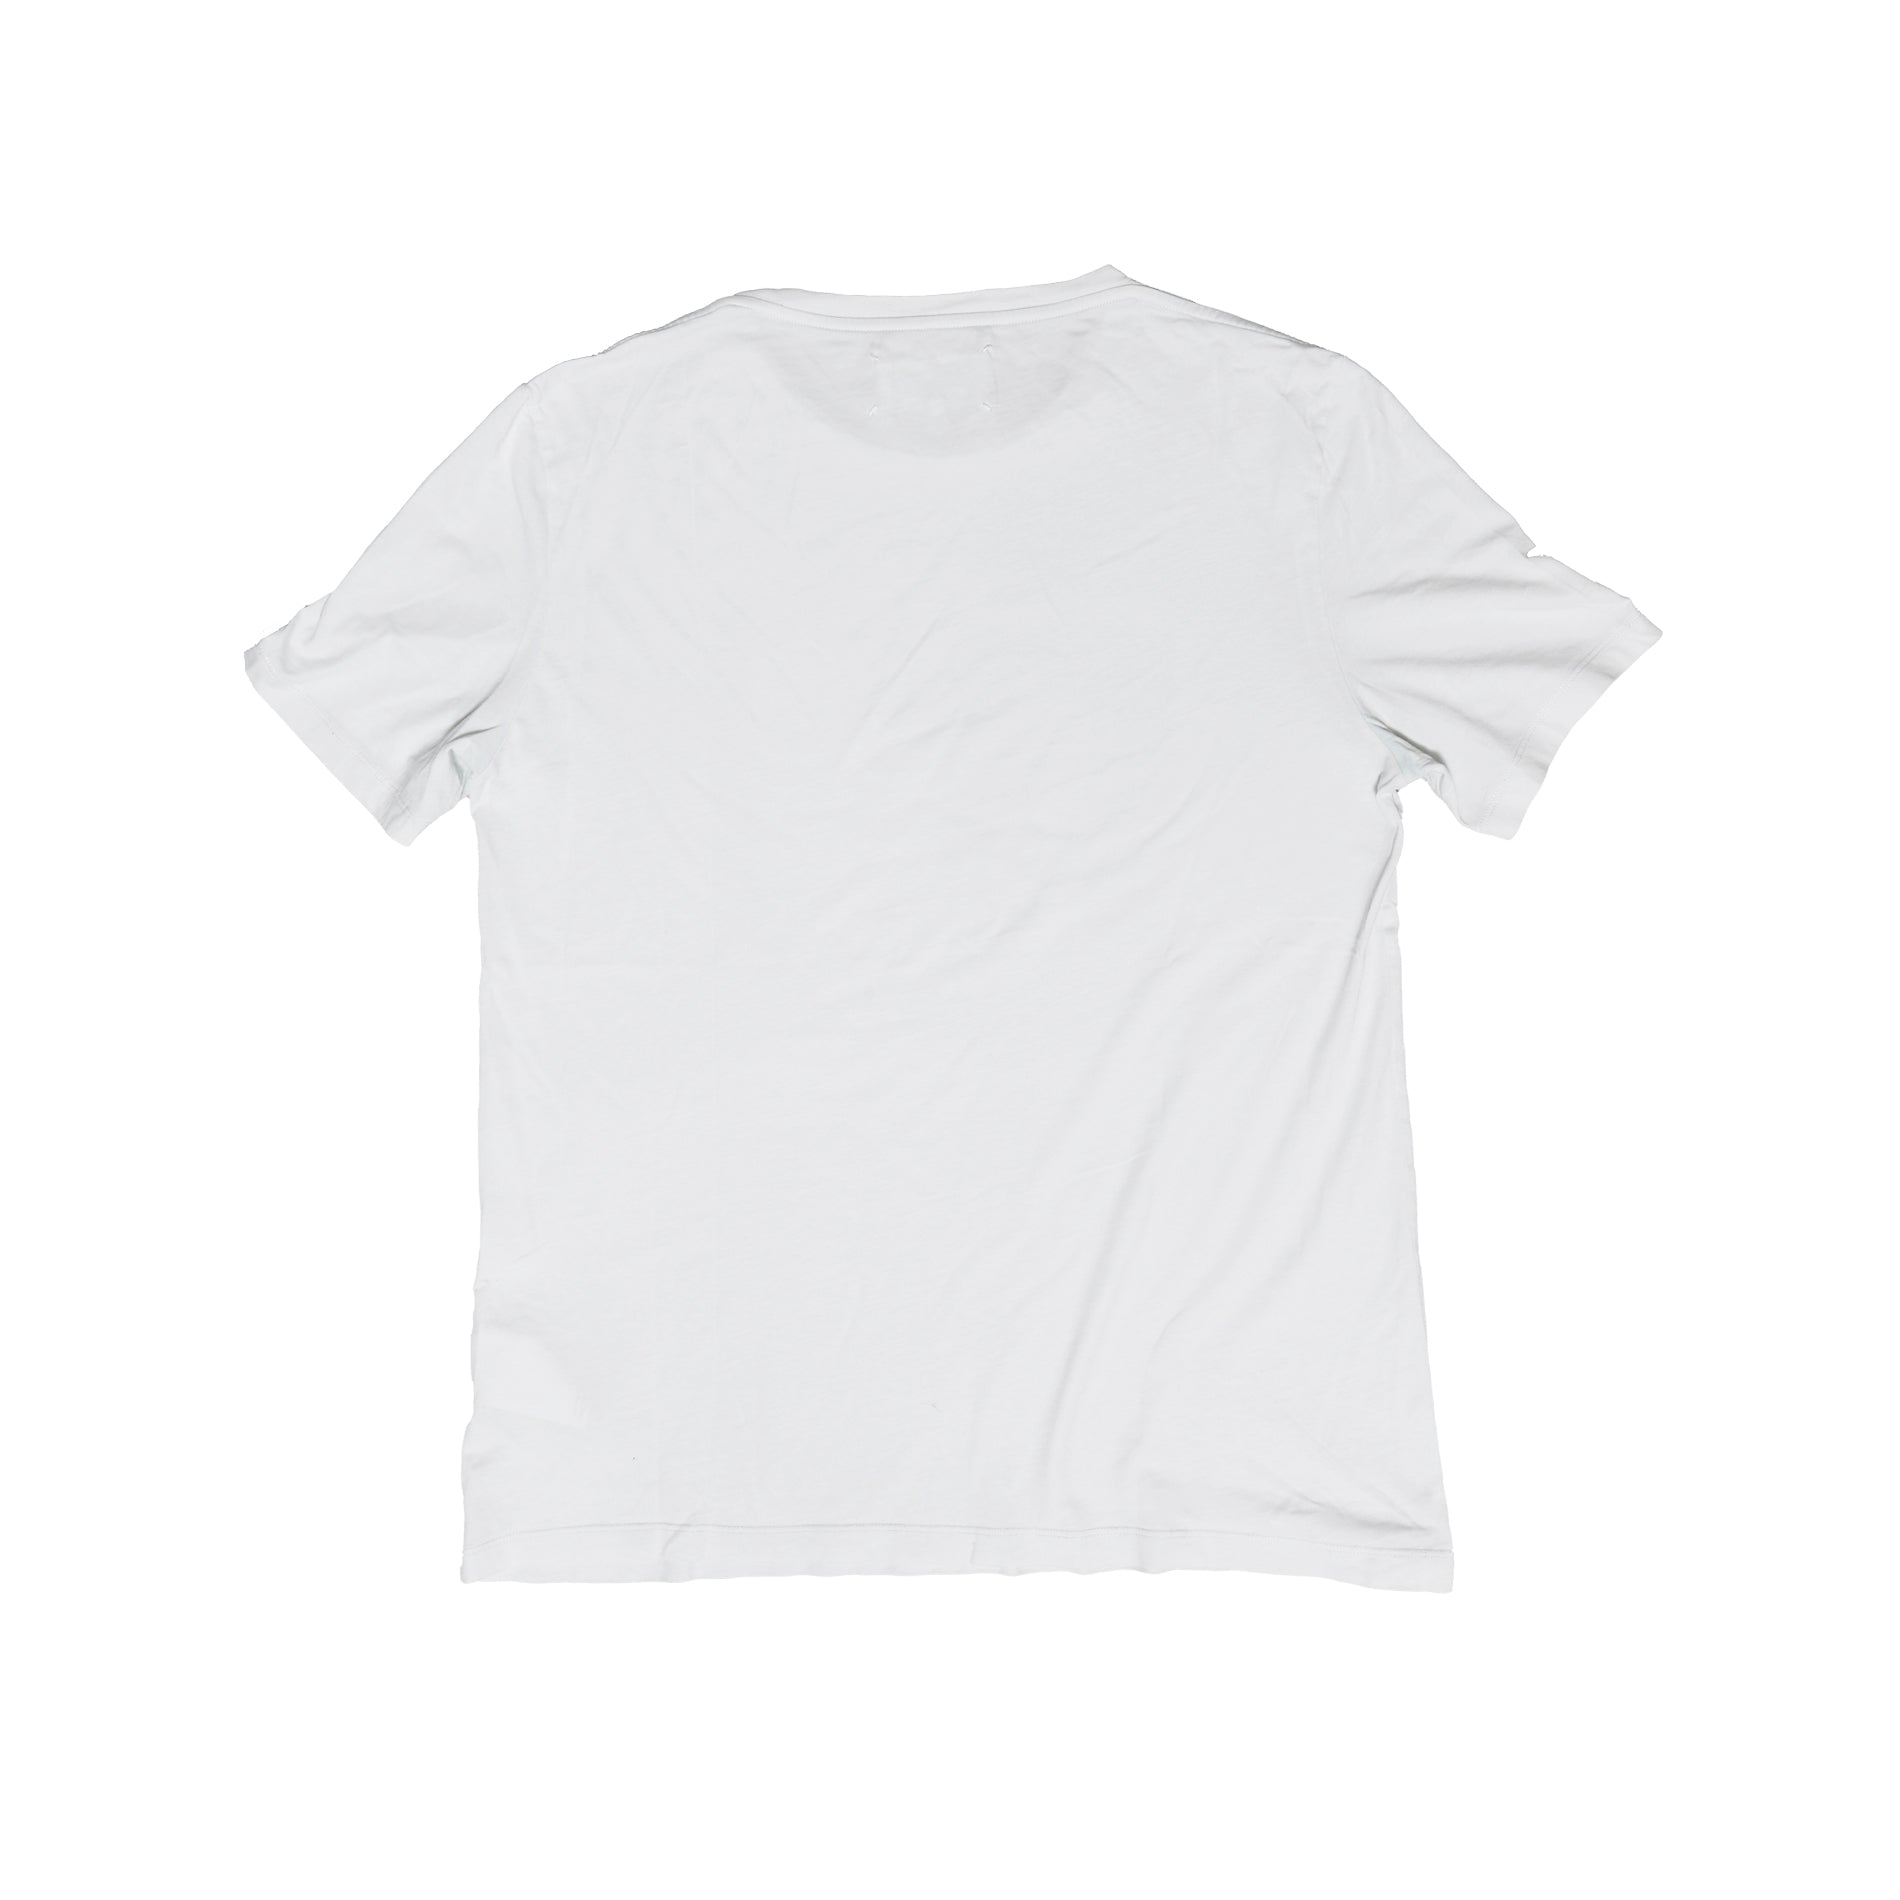 Maison Martin Margiela SS17 Silhouette T-Shirt